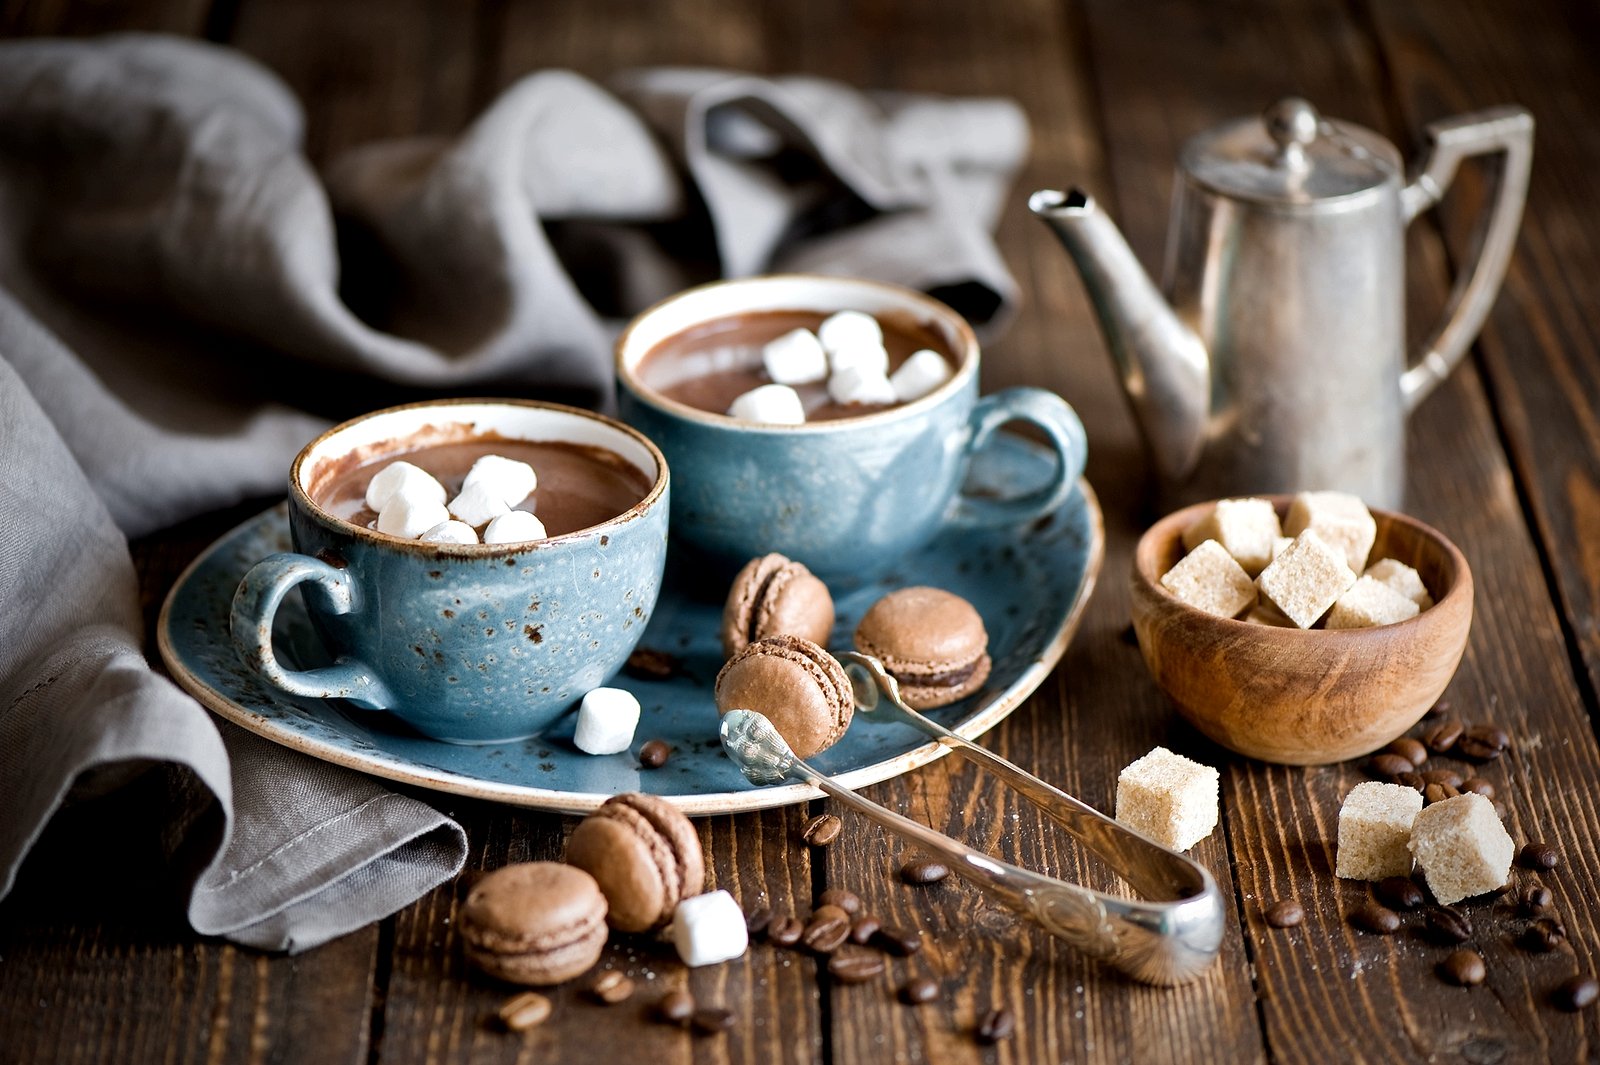 How to taste hot chocolate beverage in Paris